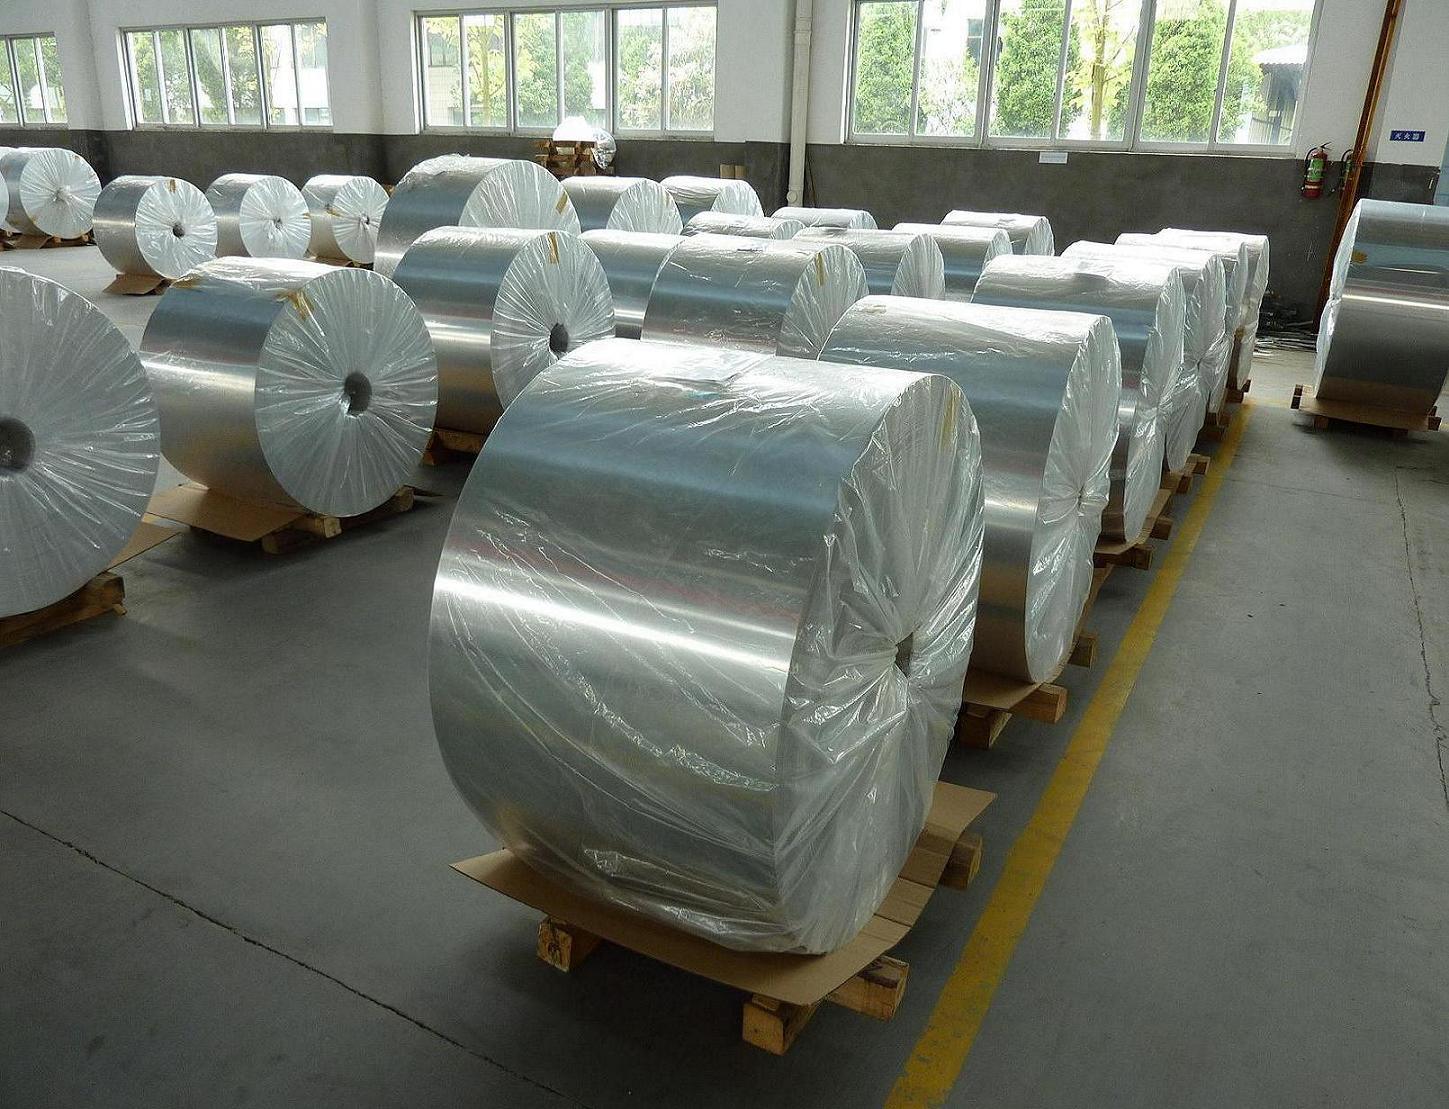 Papel de aluminio para contenedores